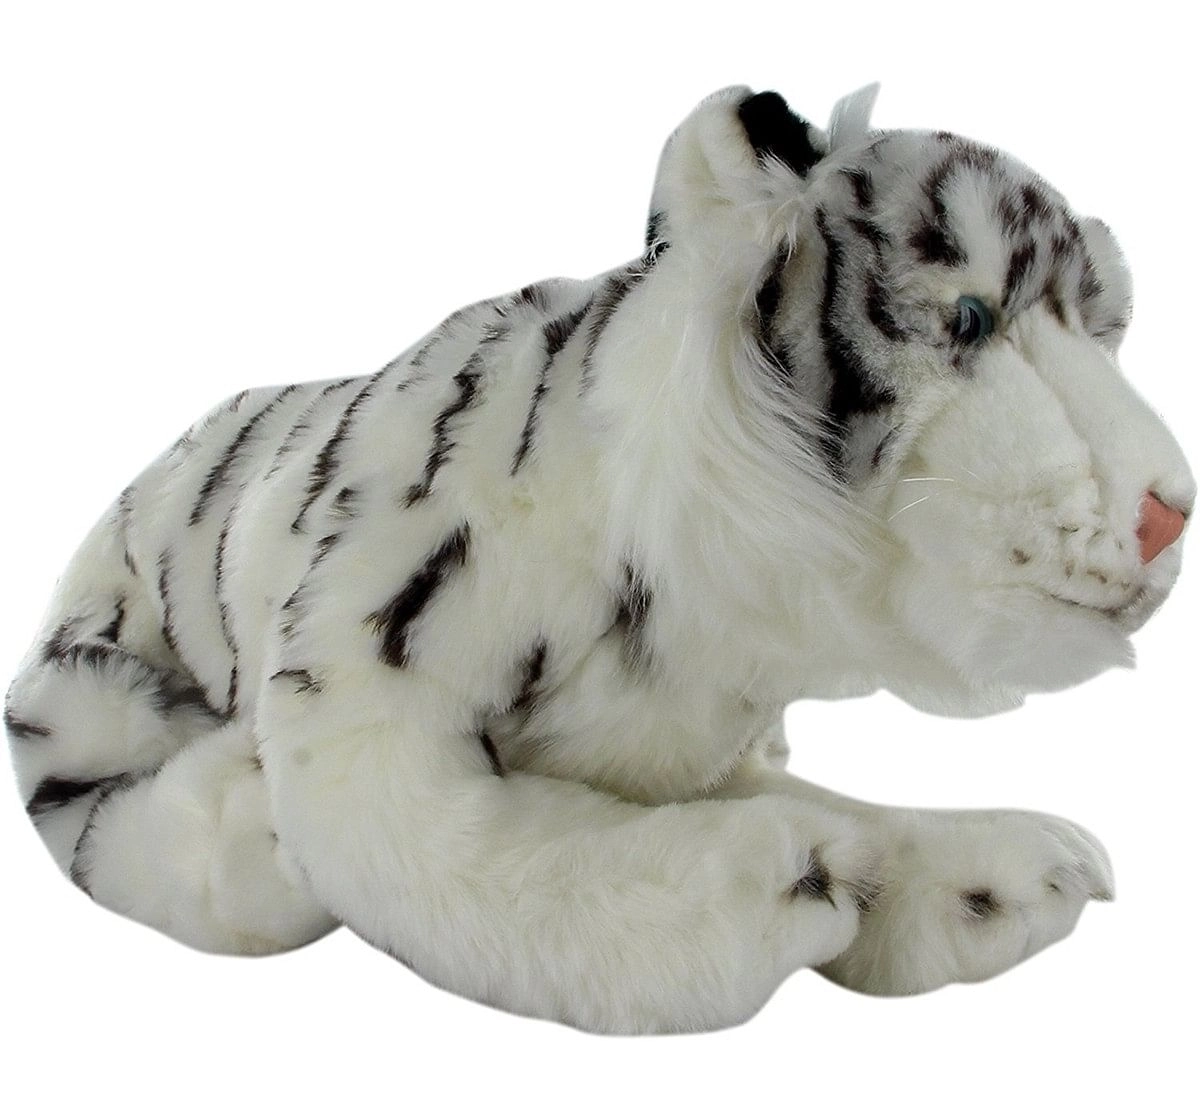 Hamleys Tara White Tiger Soft Toy Animals & Birds for Kids age 2Y+ - 10 Cm 